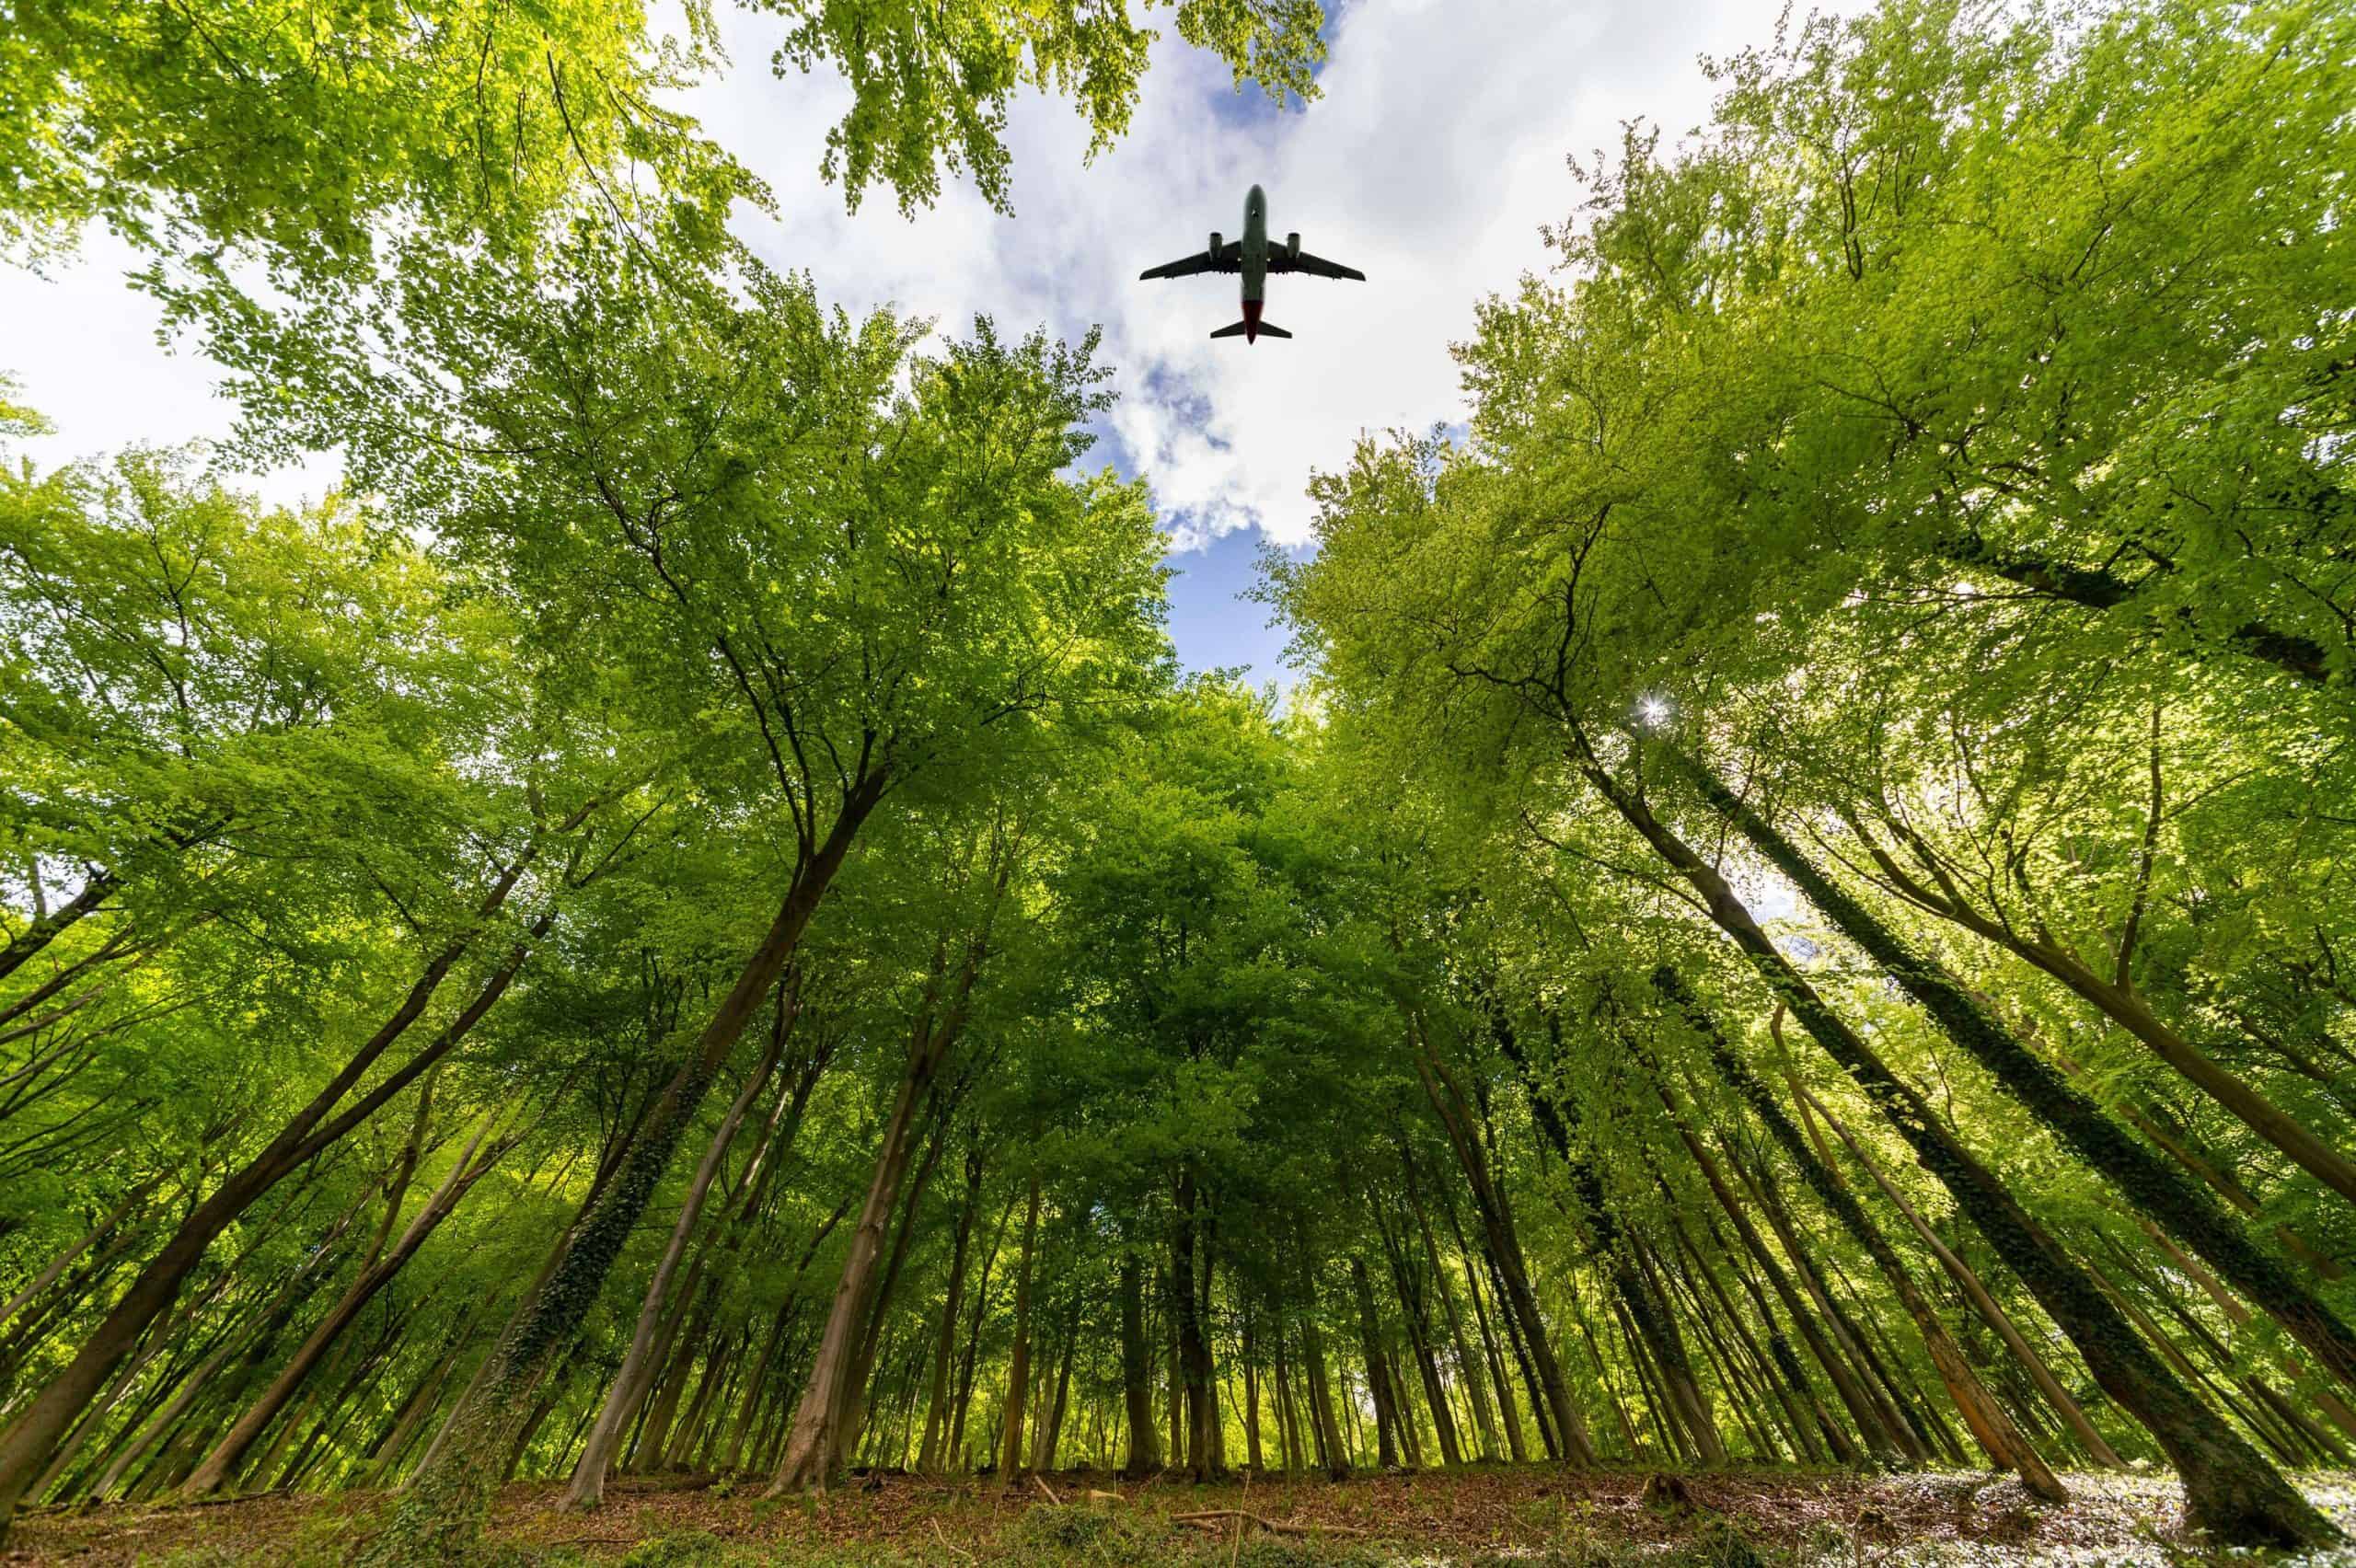 Mass corporate tree planting ‘damaging’ nature, scientist warns